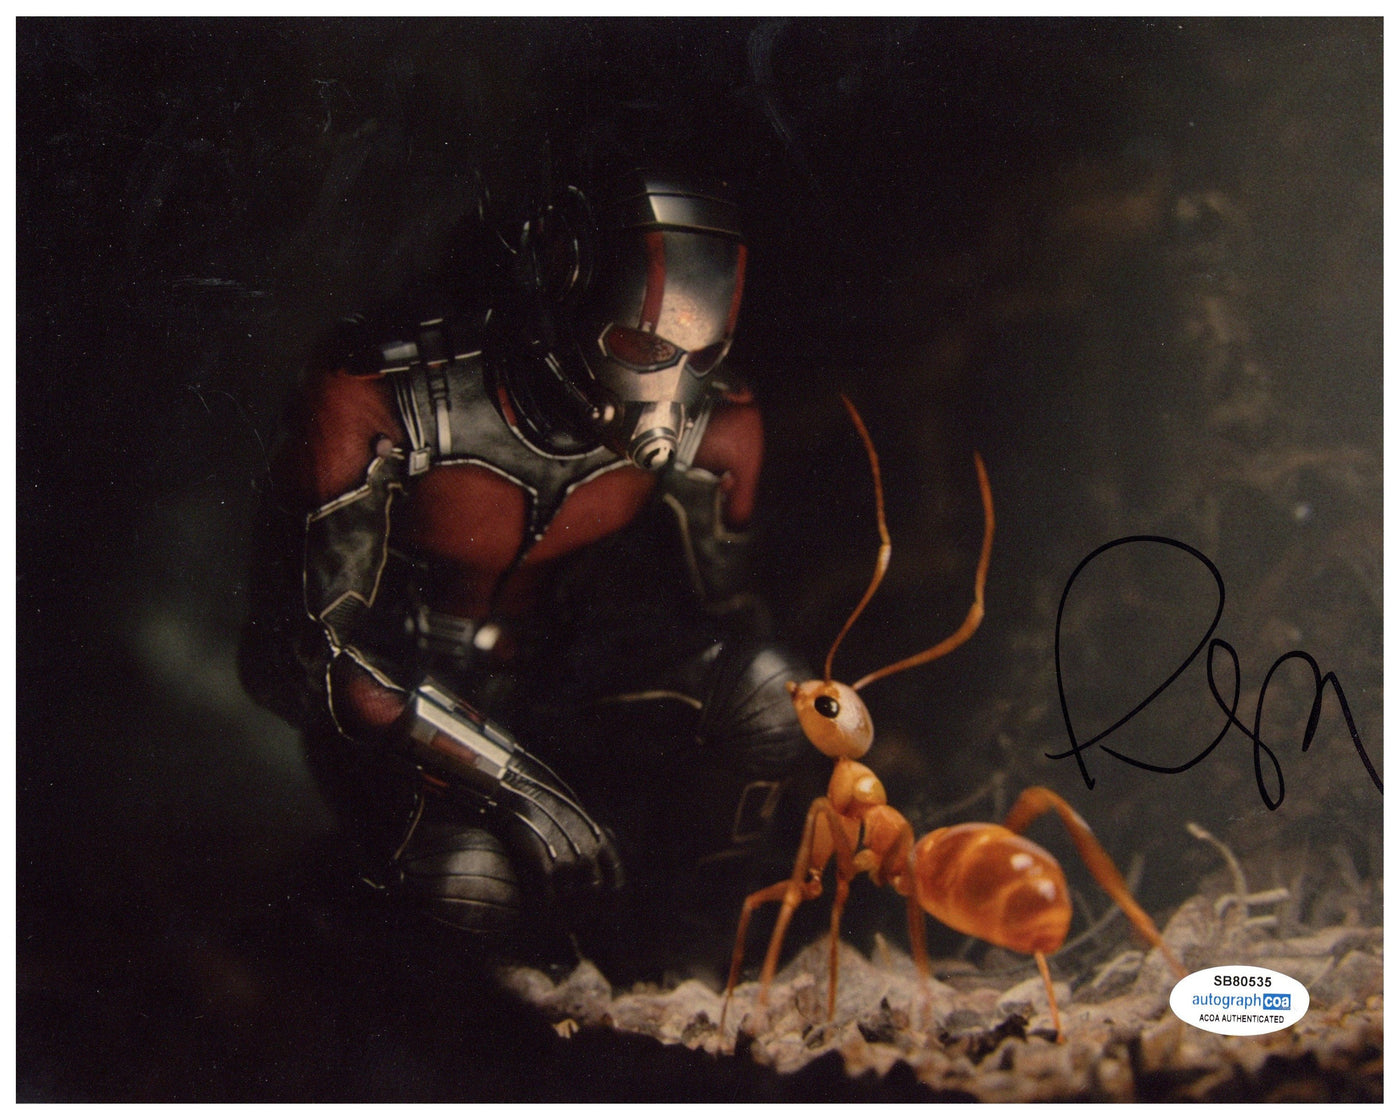 Paul Rudd Signed 8x10 Photo Marvel Ant-Man Autographed ACOA #3